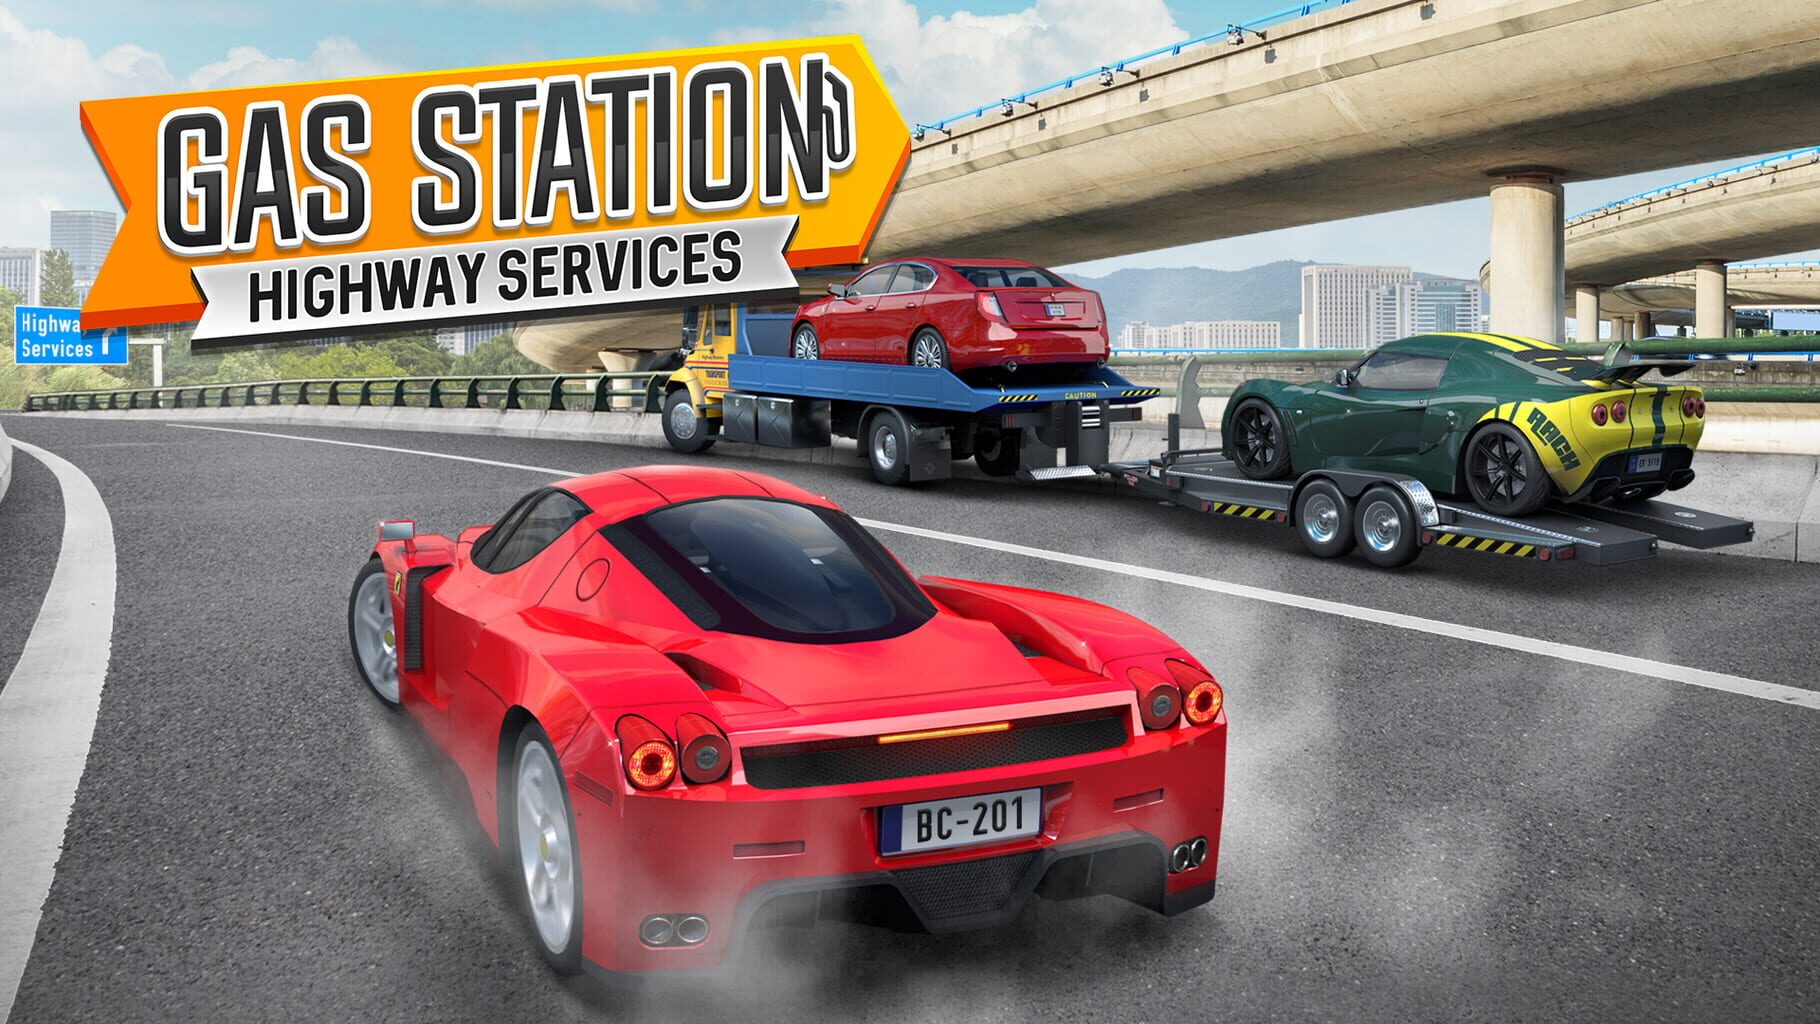 Gas Station: Highway Services artwork